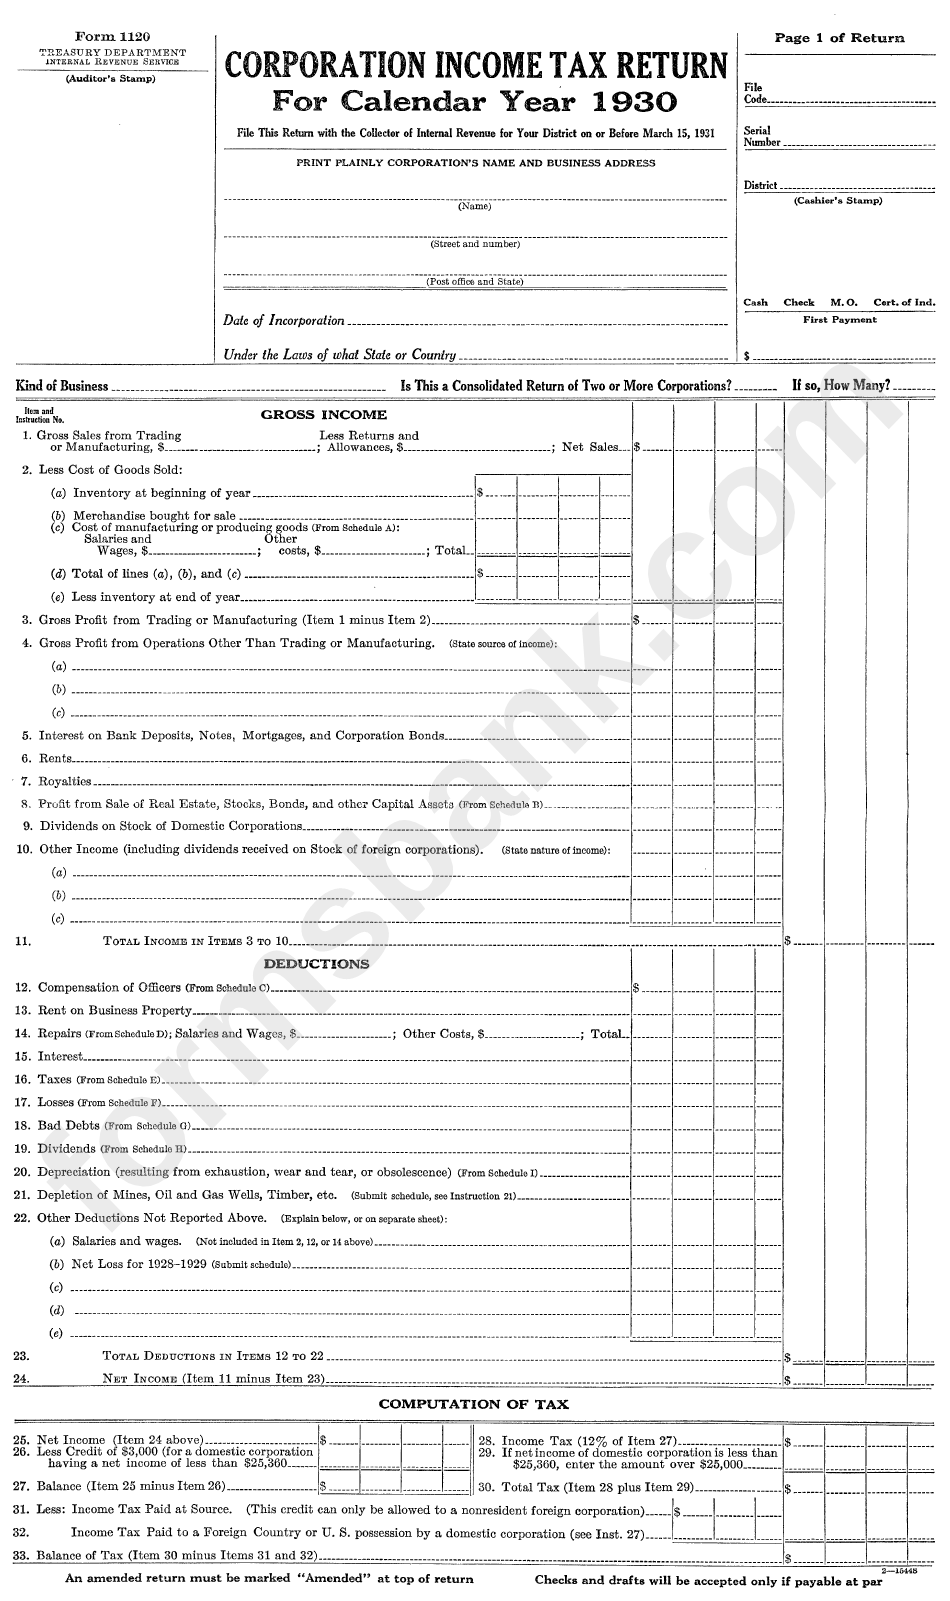 Form 1120 - Corporation Income Tax Return - 1930